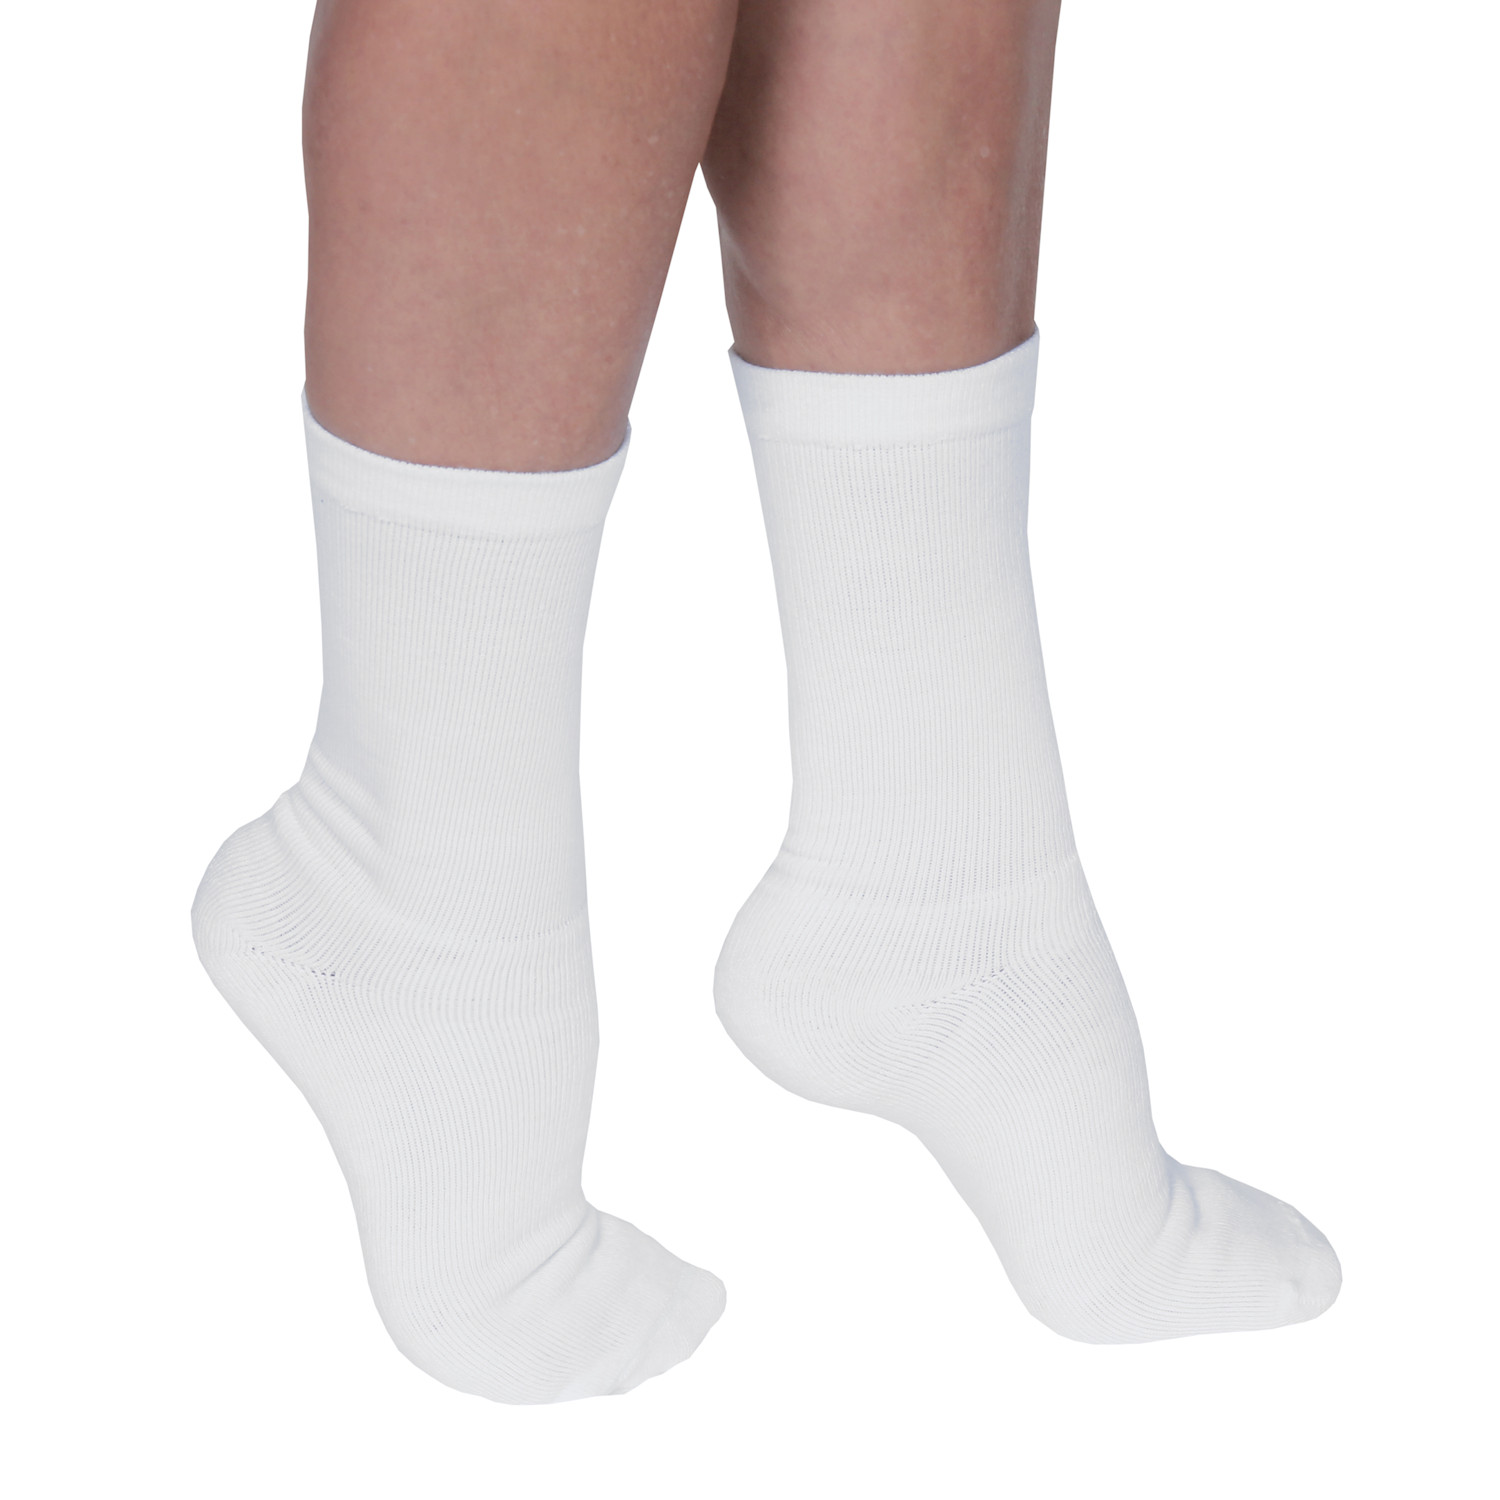 Elastic Therapy Support Plus Unisex Mild Compression Socks - Coolmax Opaque White Crew